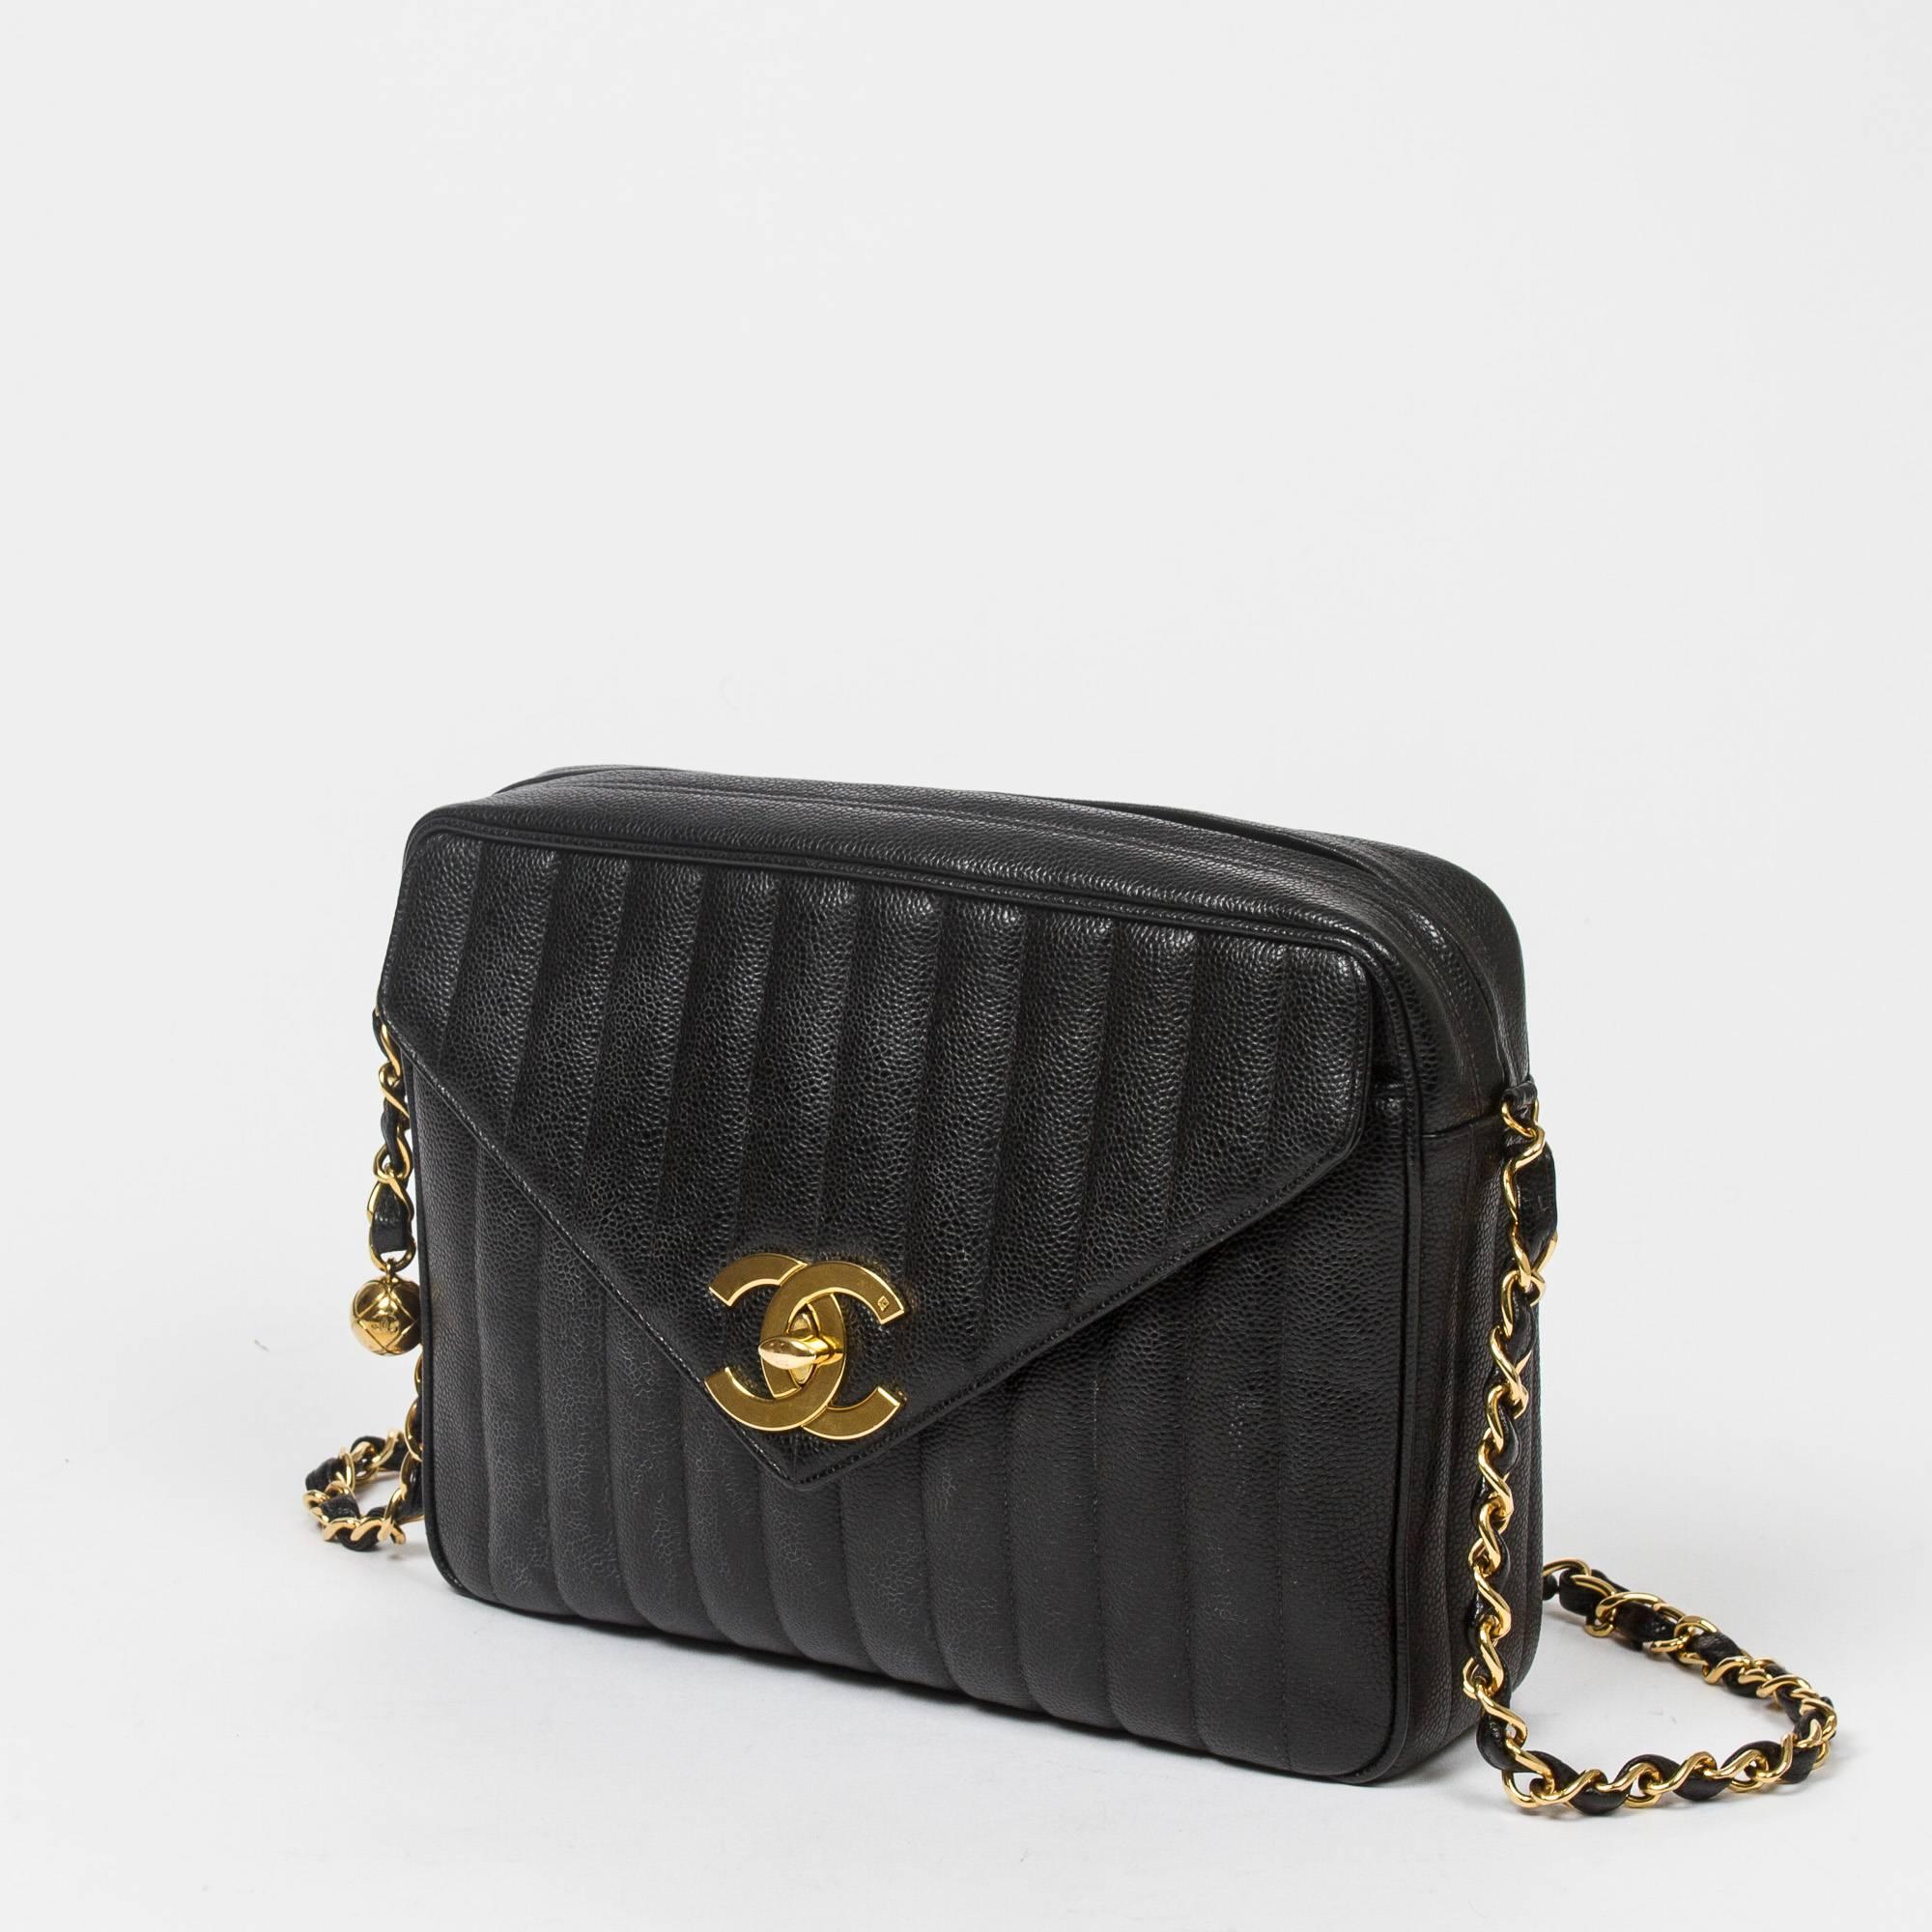 Chanel Zip Shoulder Bag Front Flap Pocket Black Leather. Excellent condition